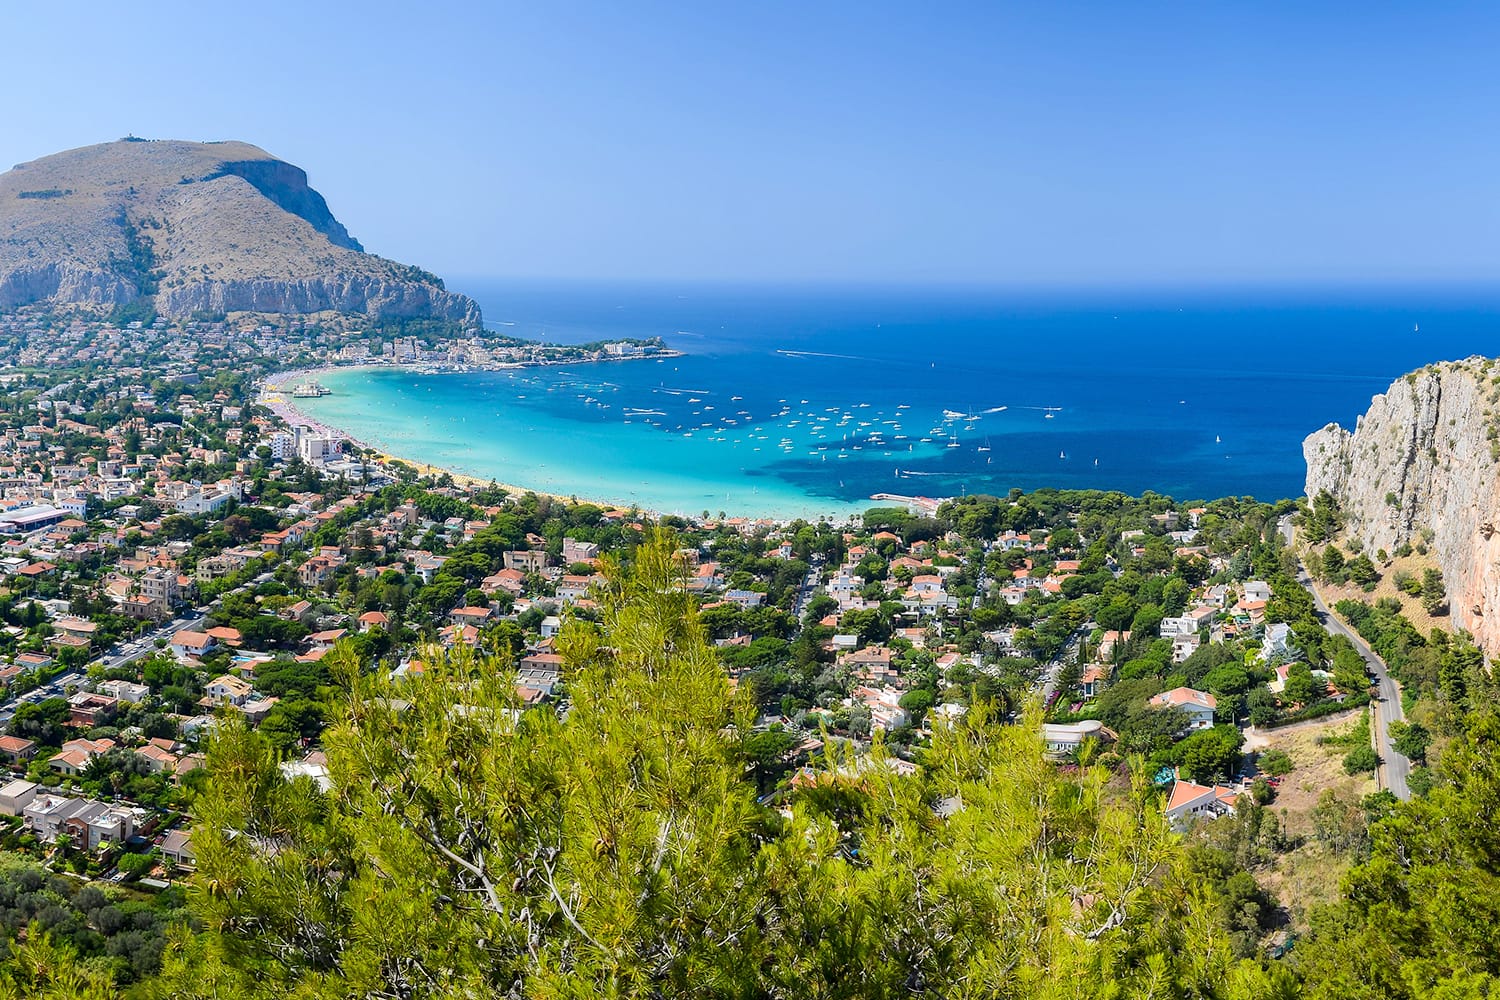 View of the gulf of Mondello from Monte Pellegrino, Palermo, Sicily, Italy.